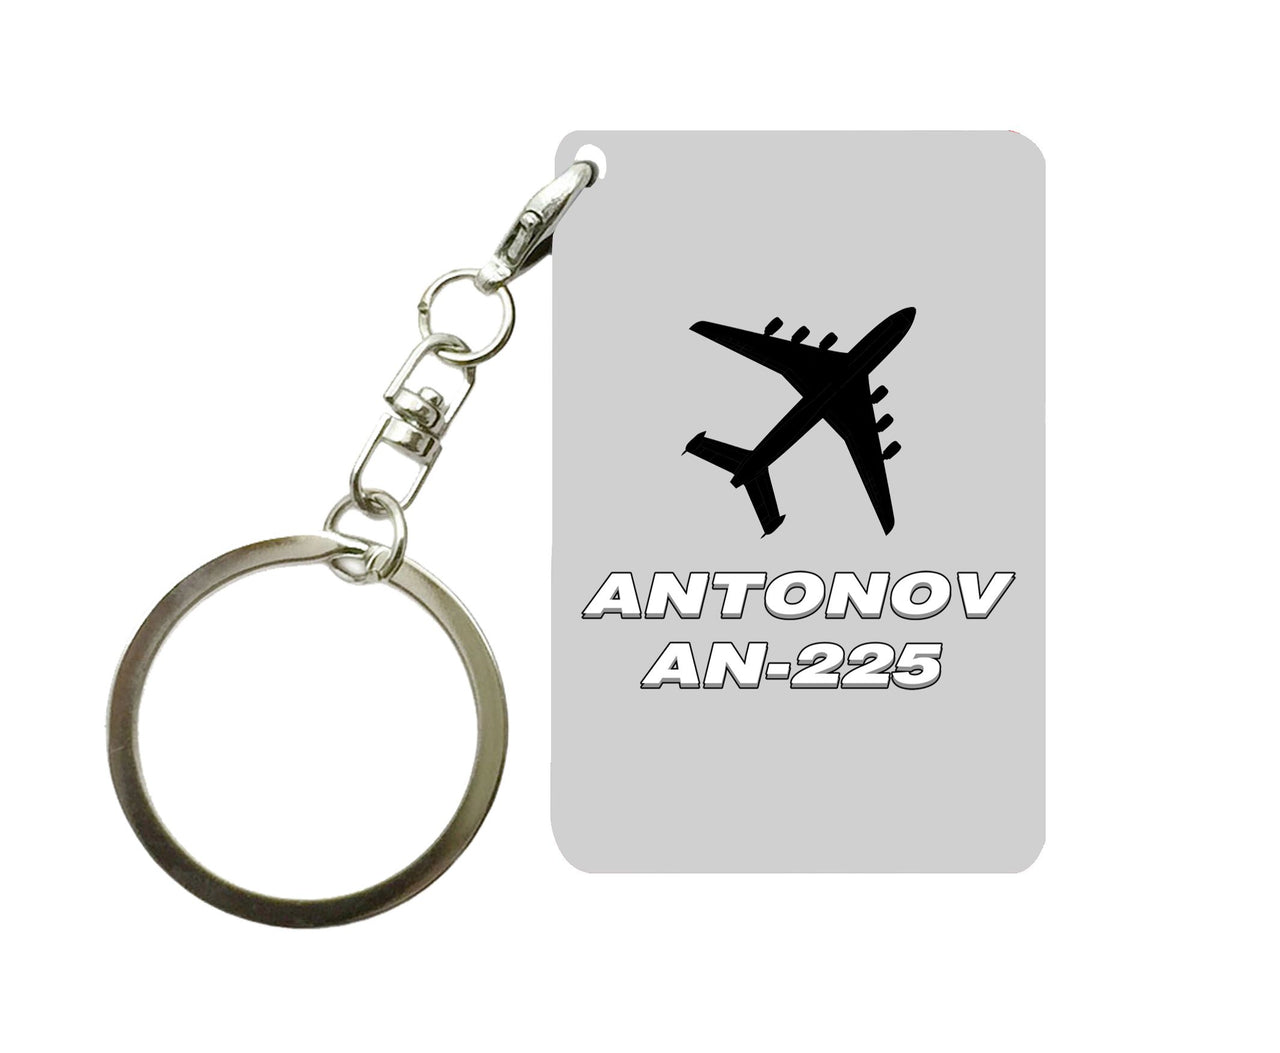 Antonov AN-225 (28) Designed Key Chains